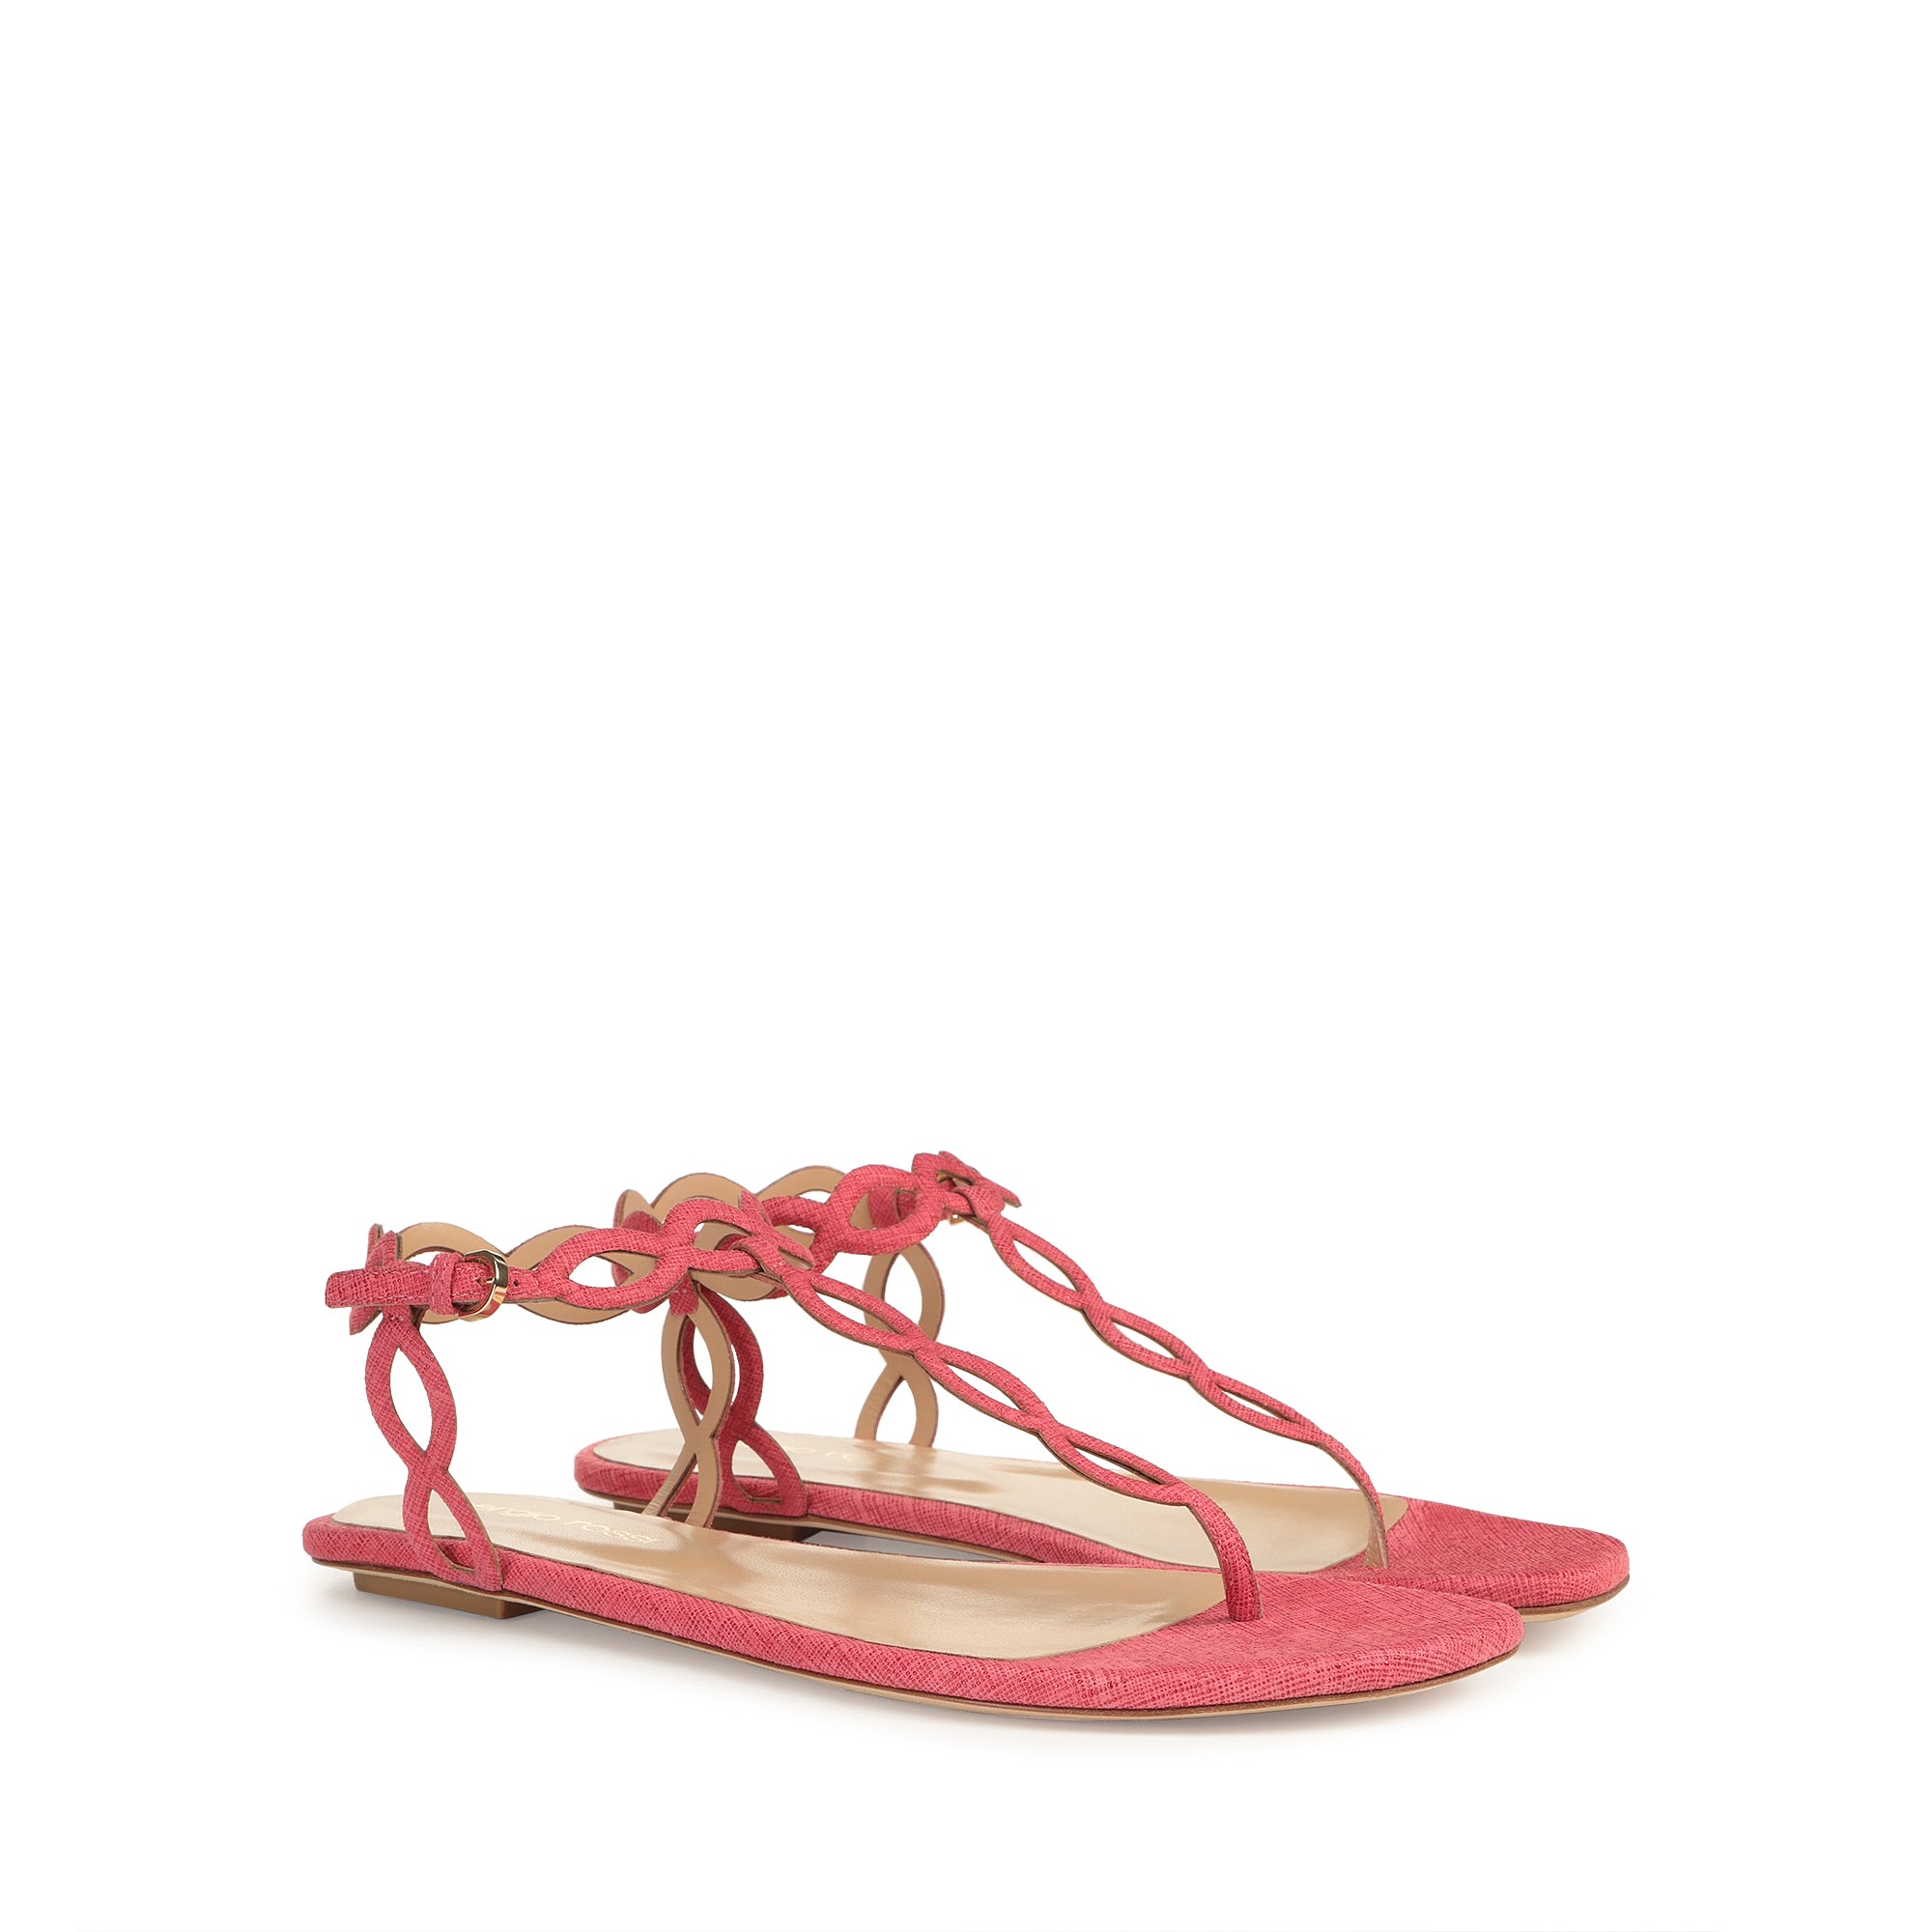 Mermaid flat sandals - Mambo Pink